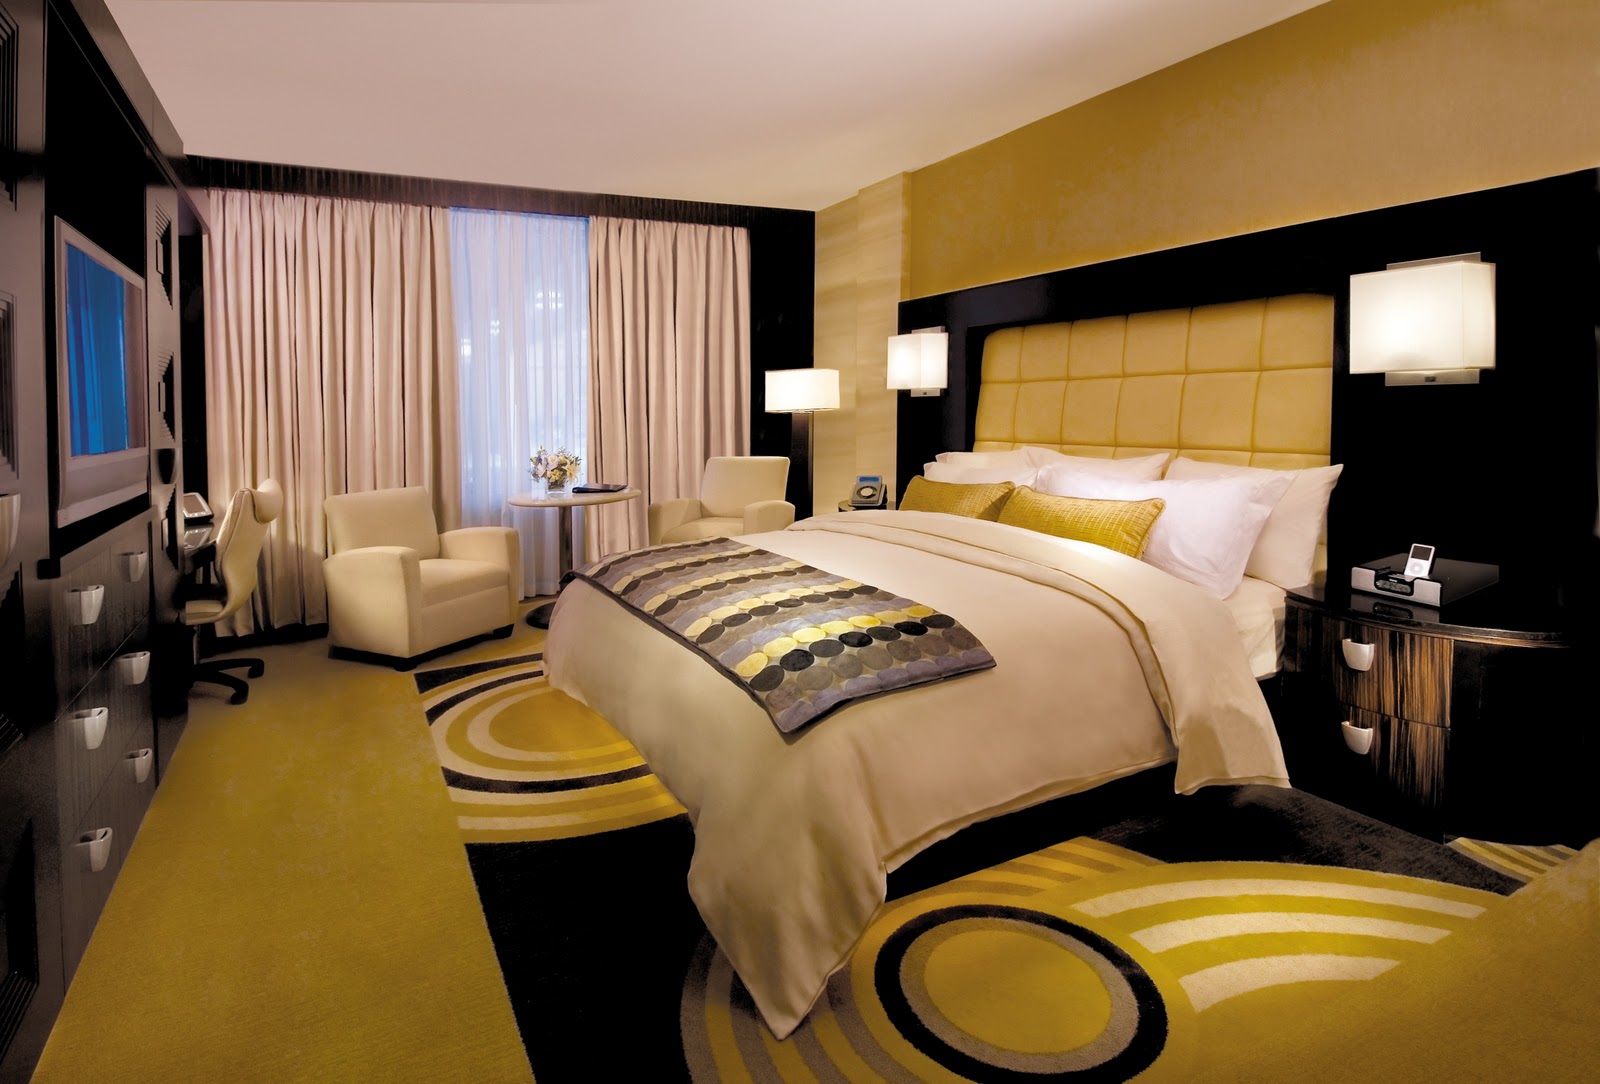 Standing Ovation: Design luxury hotel room